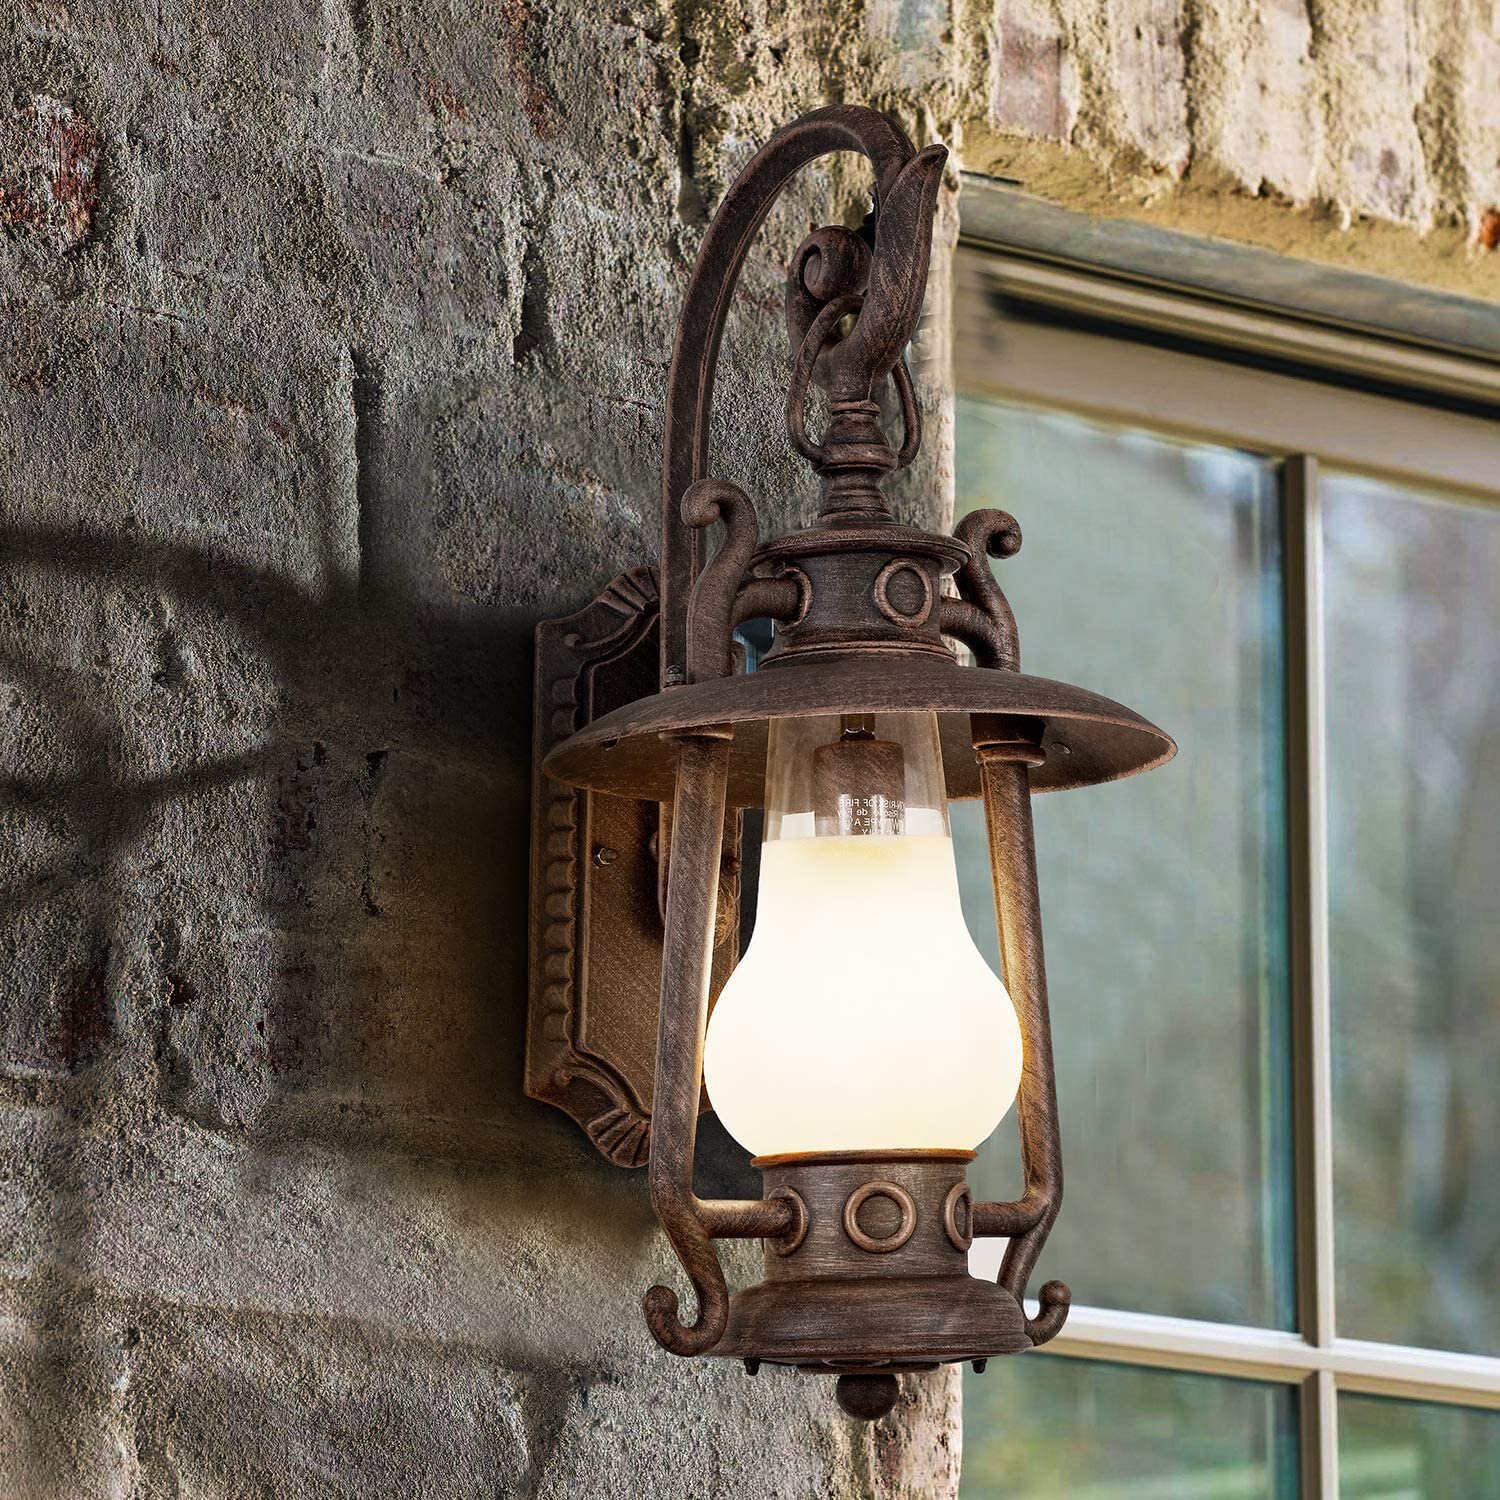 Retro Antique Rustic Lantern Lamp Wall Lamp Sconce Light Fixture Outdoor E26 